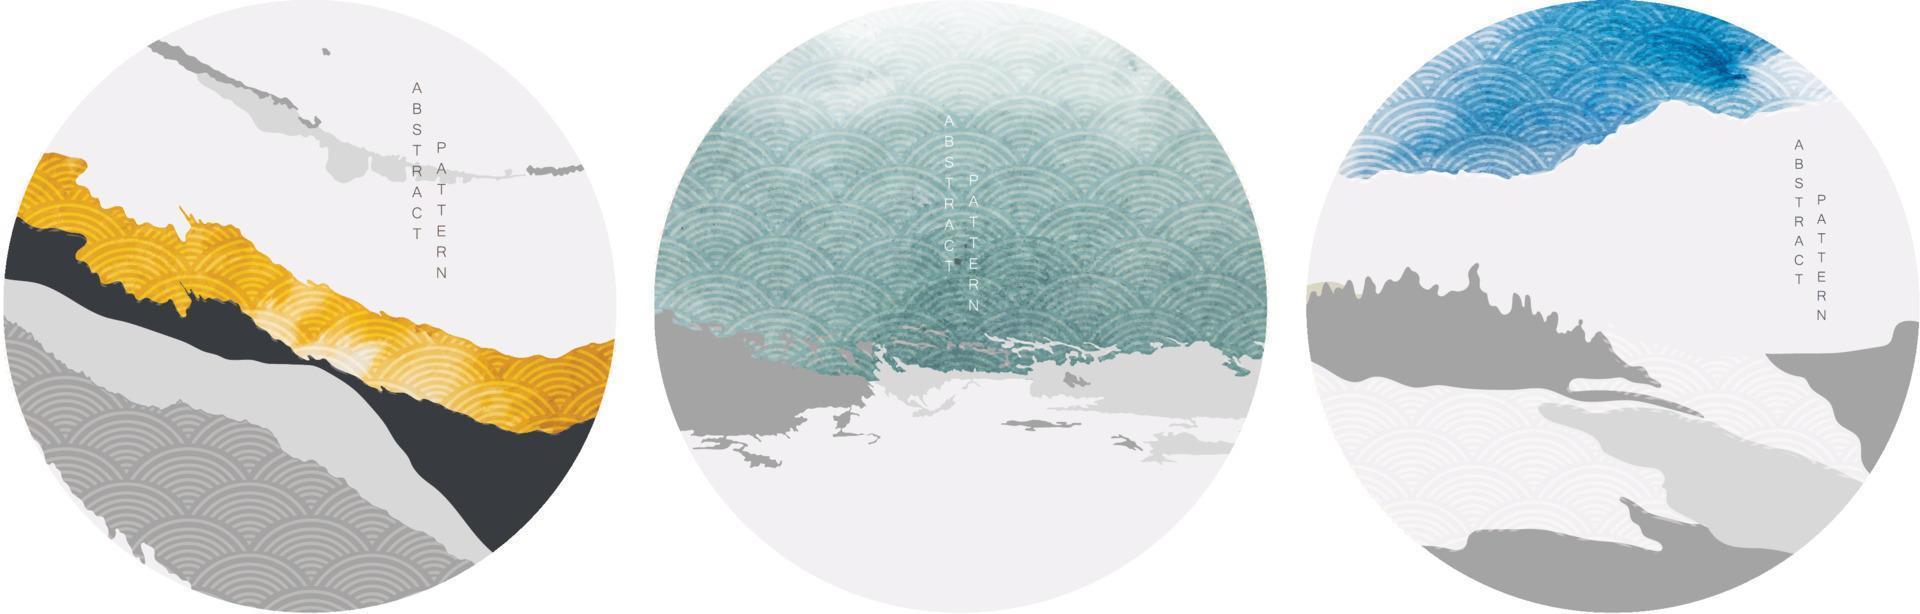 fondo de paisaje abstracto con vector de patrón de onda japonés. bosque de montaña con icono de colina de silueta con textura de trazo de pincel.